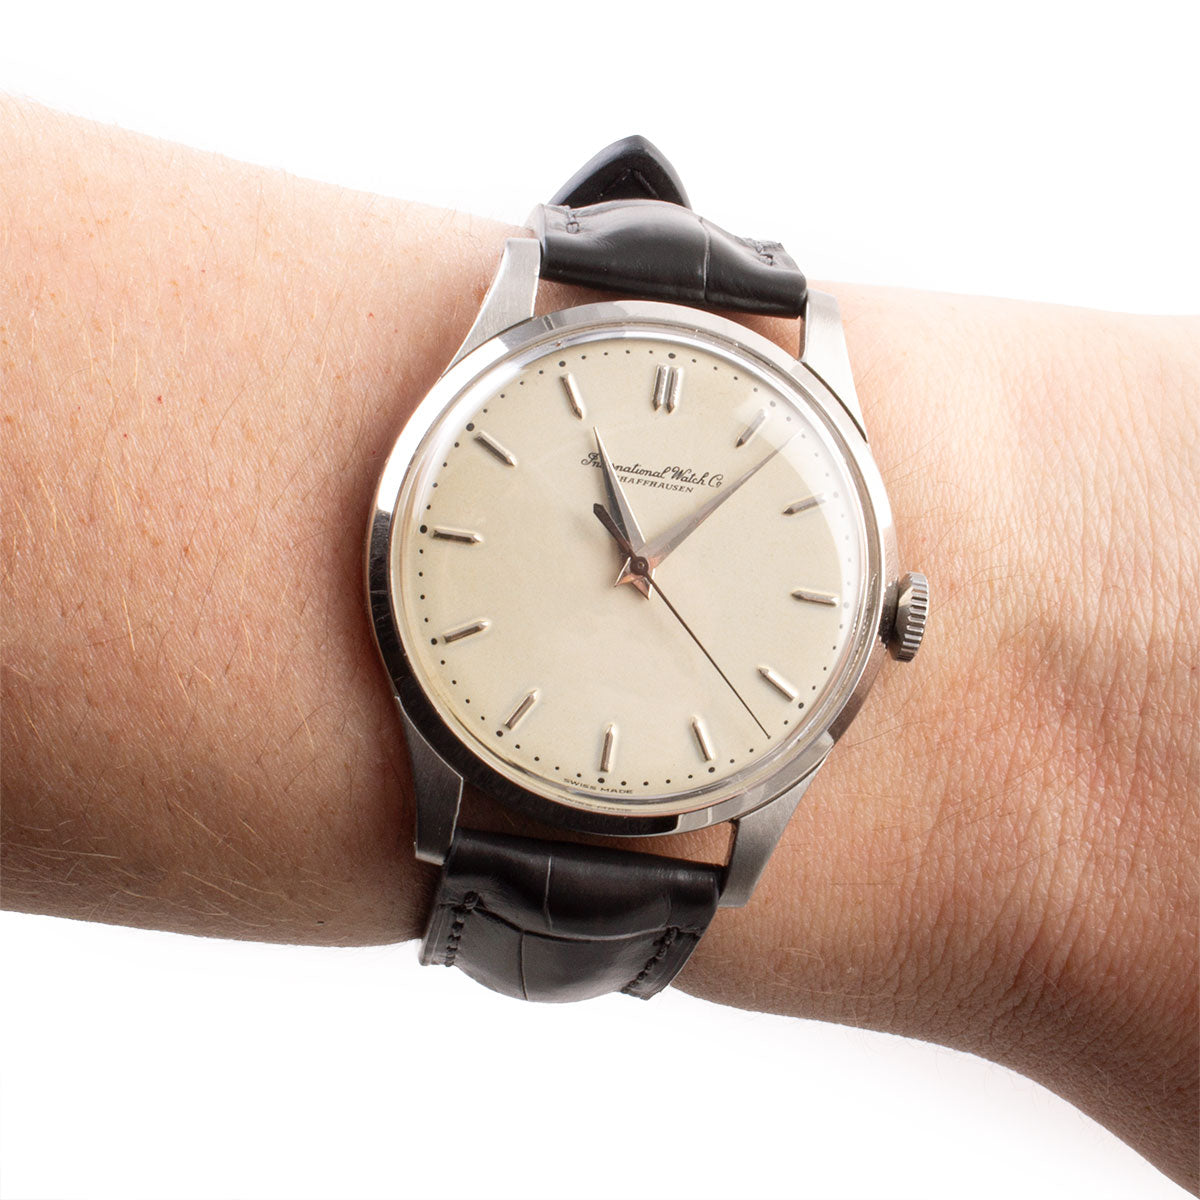 Second-hand watch - IWC - 2150€